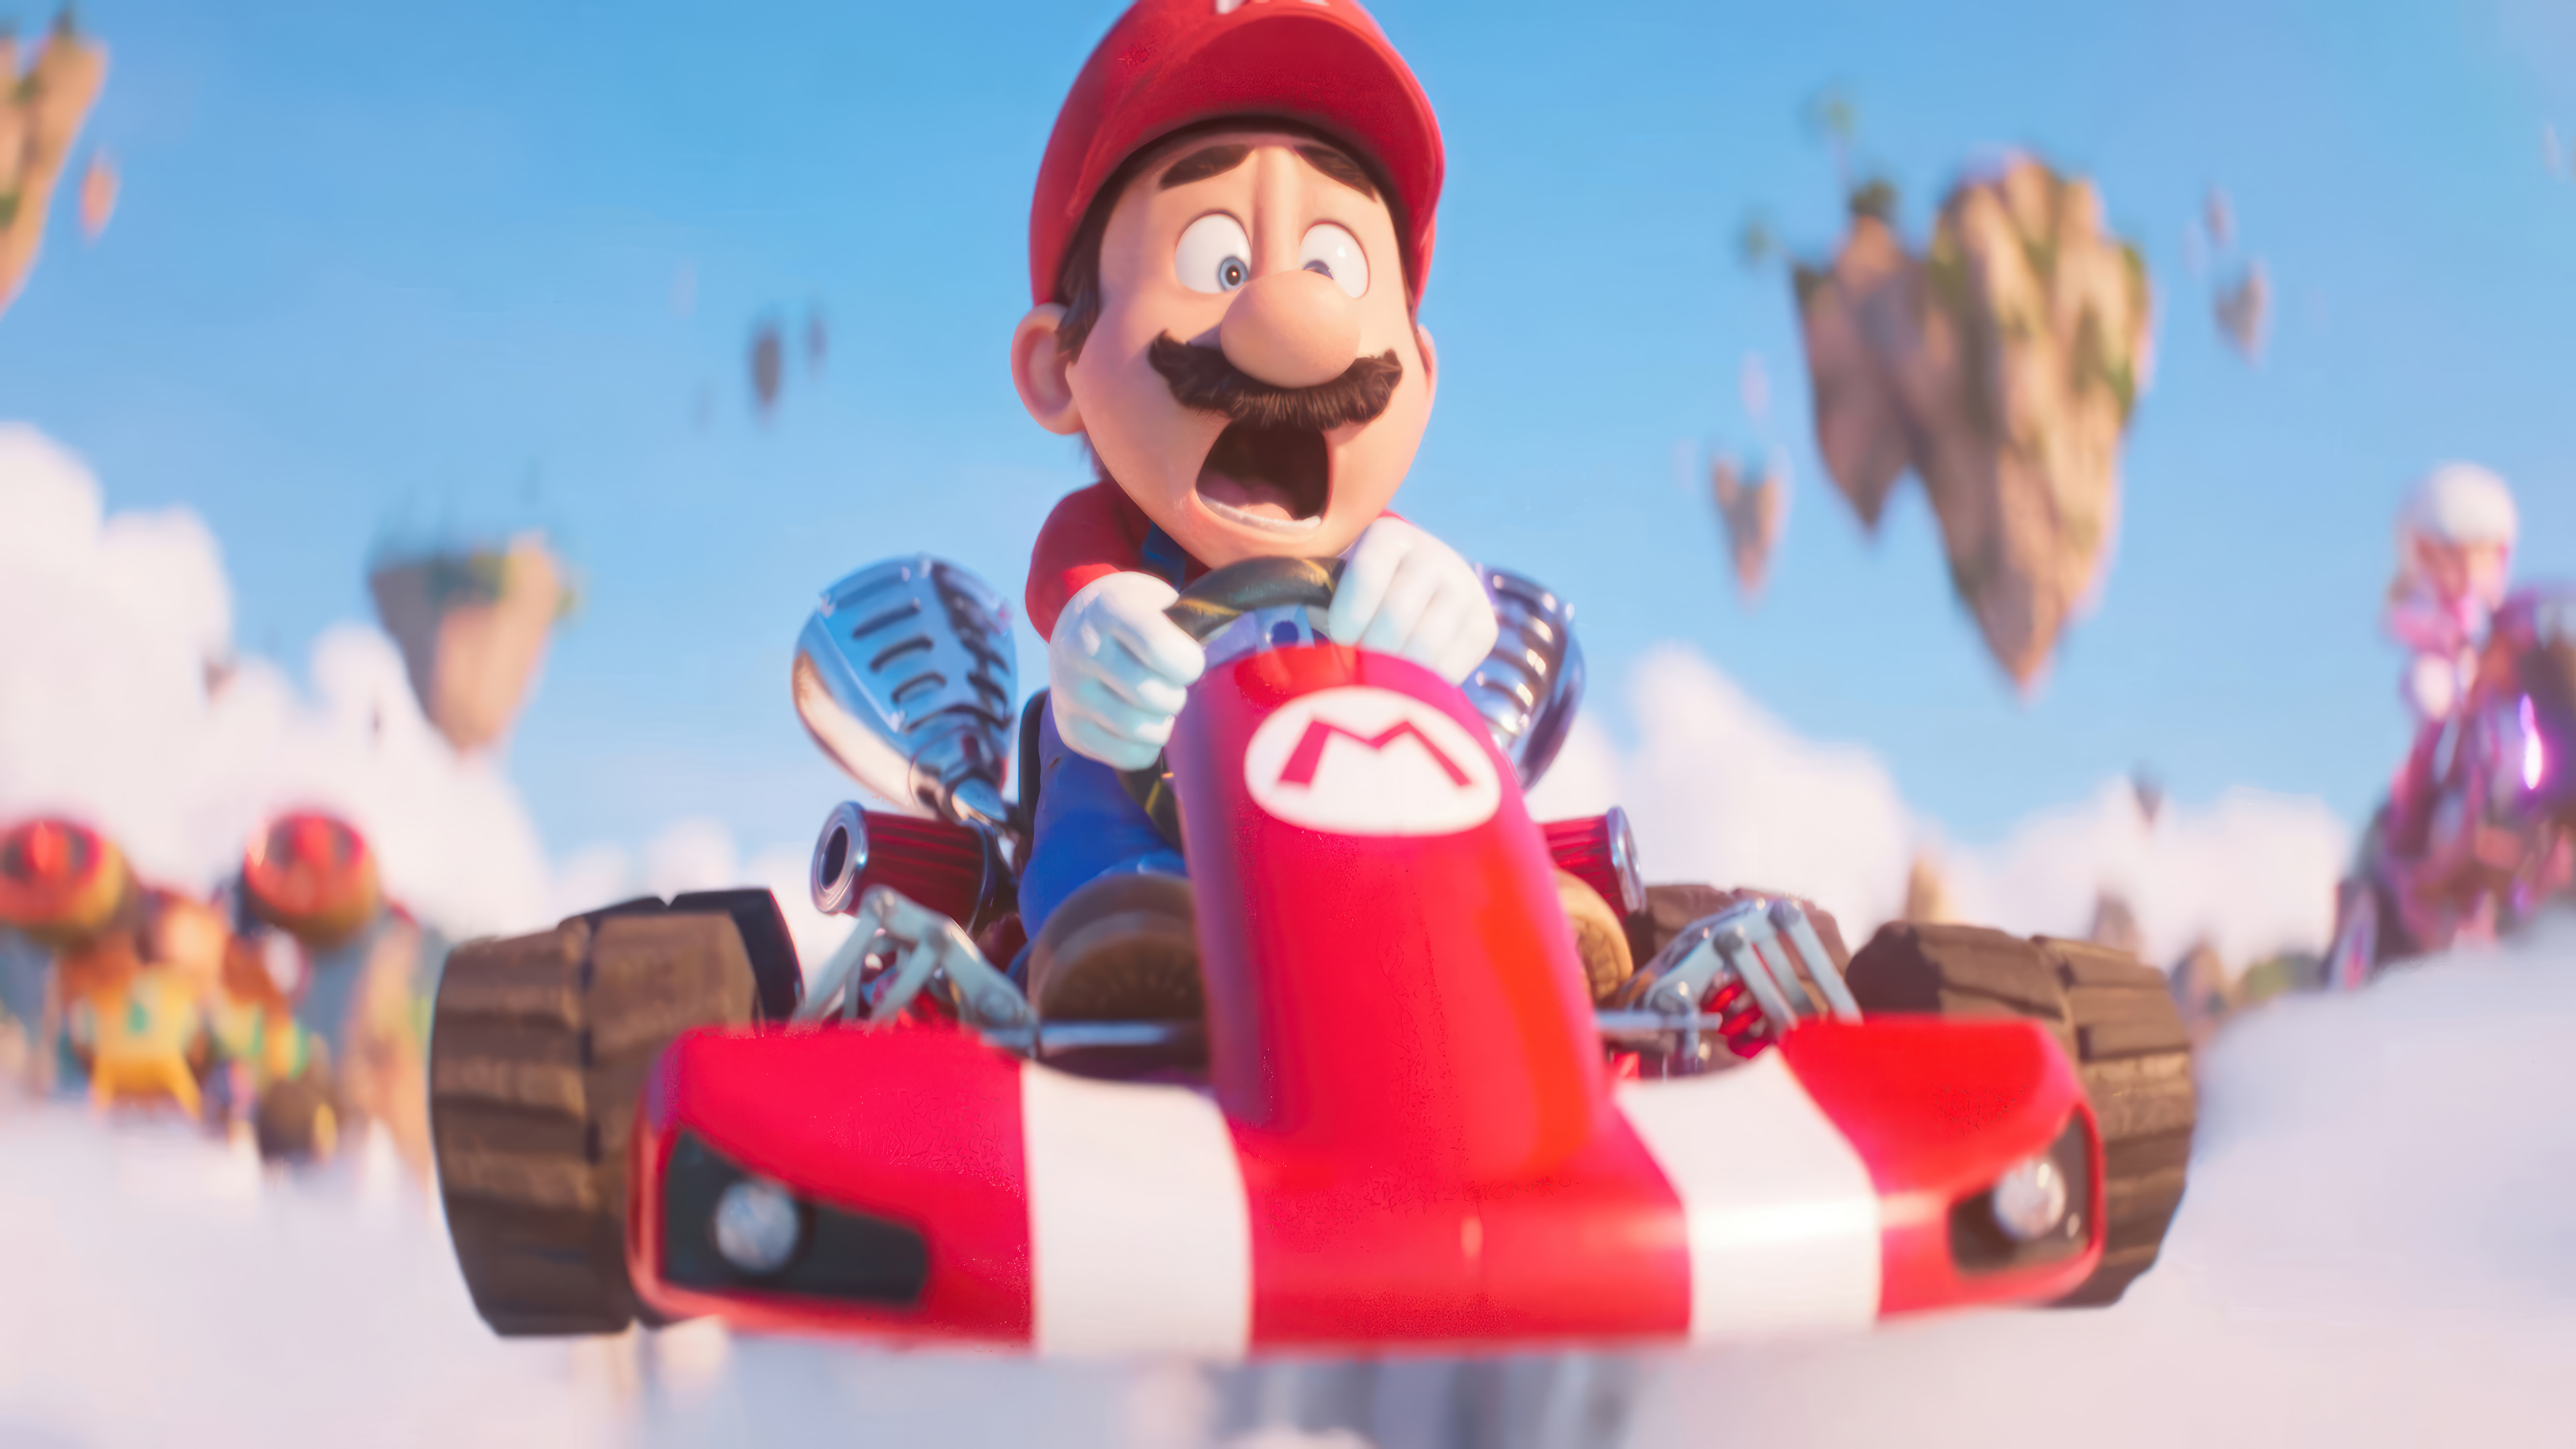 General 3840x2160 Mario movie characters film stills CGI hat vehicle moustache